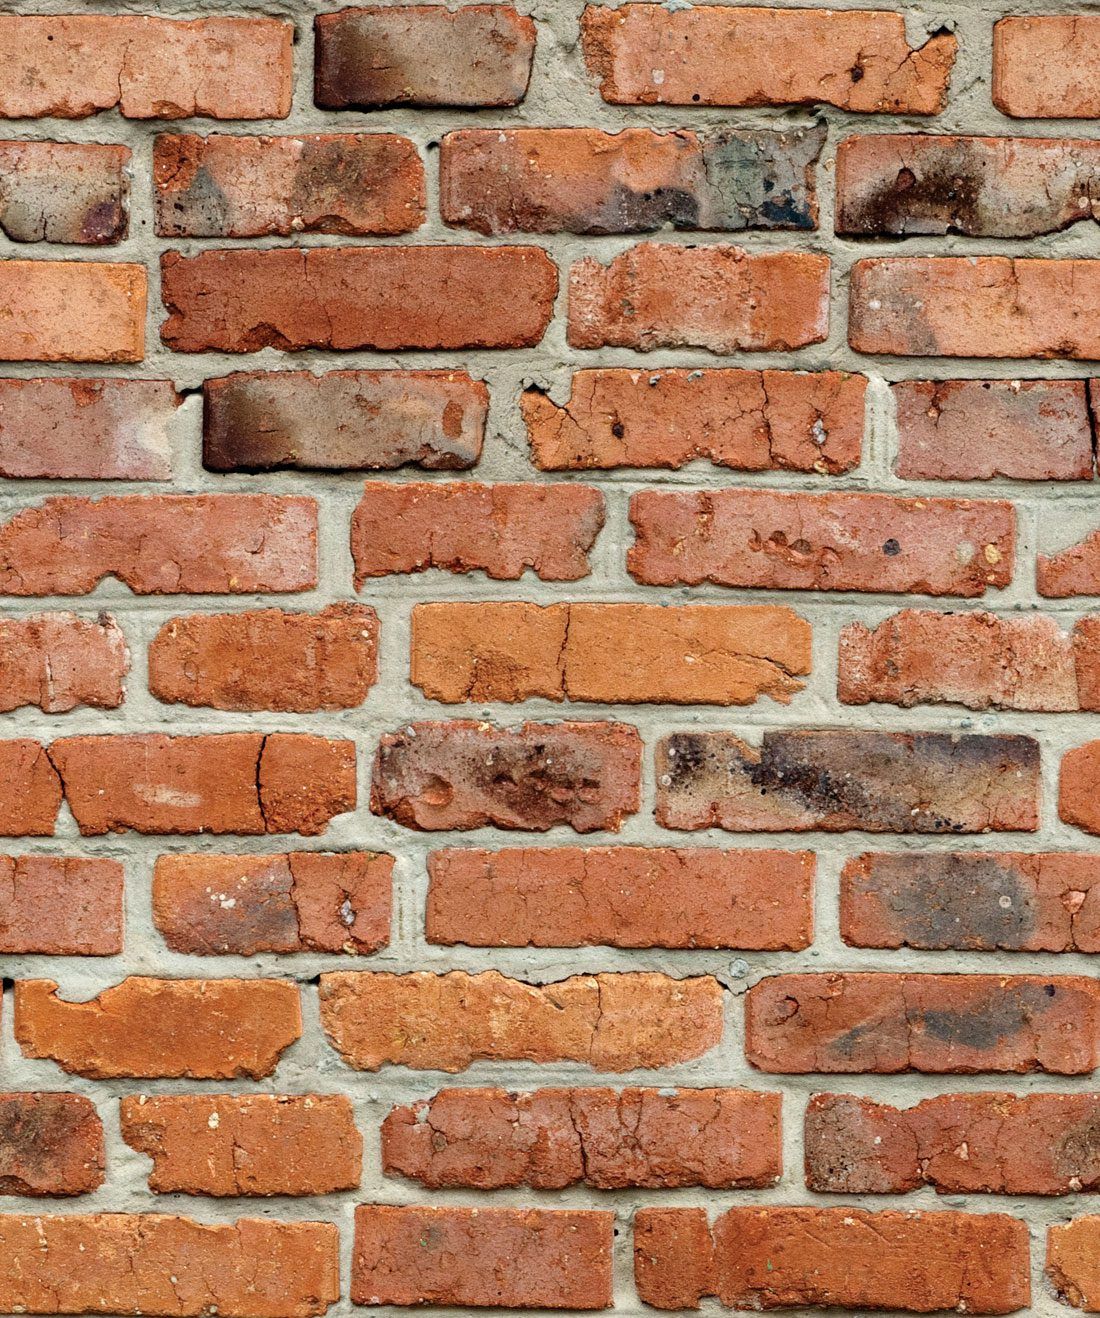 camden factory bricks is a realistic red brick wallpaper